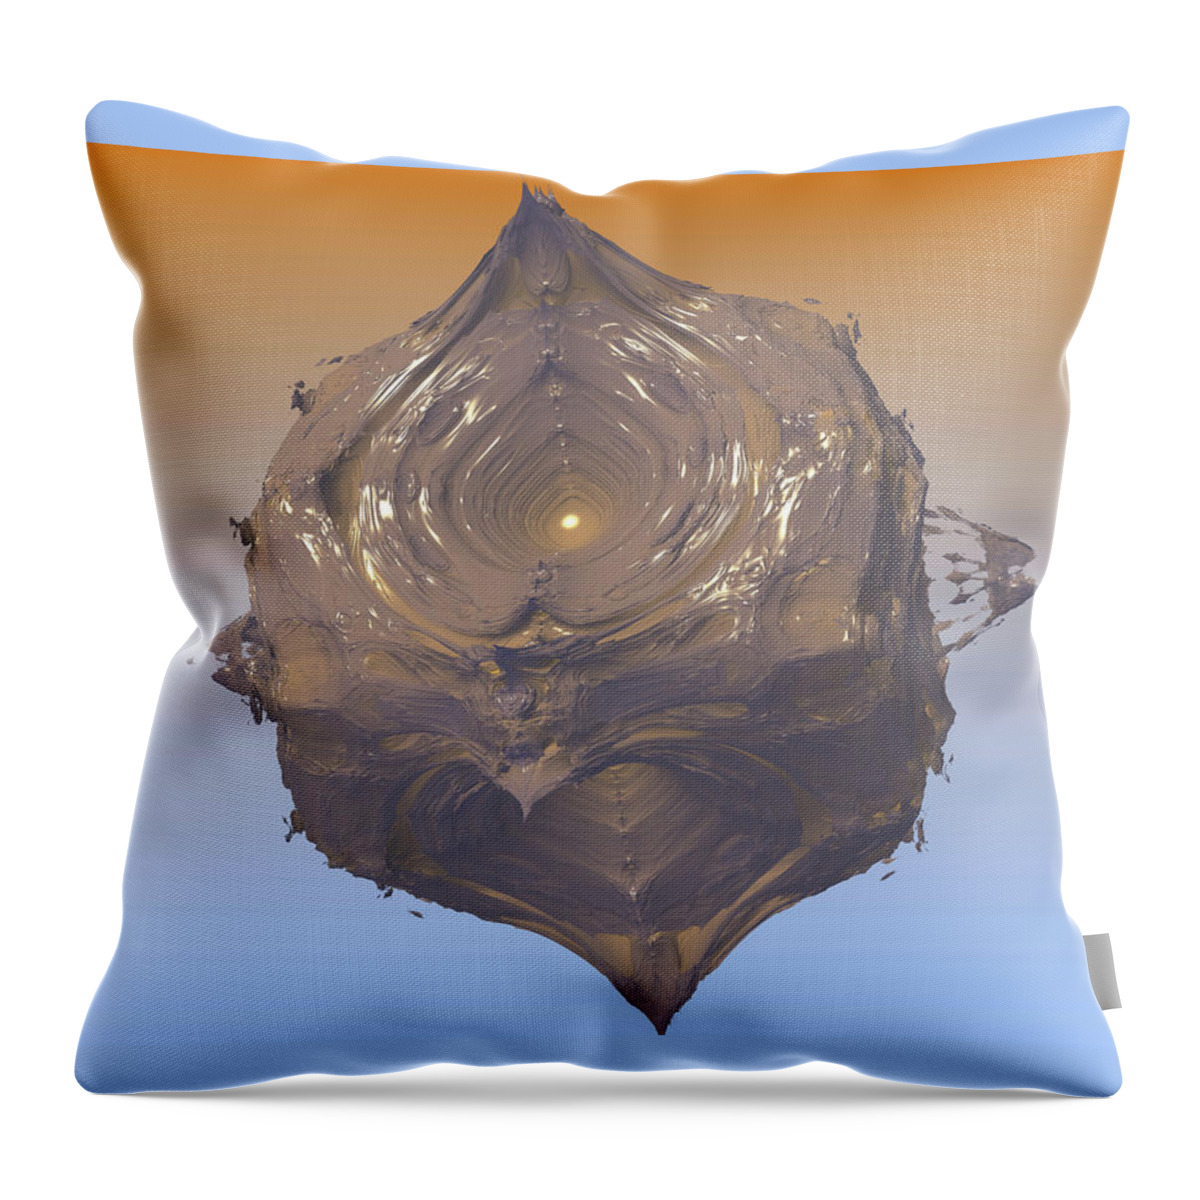 Diatom Throw Pillow featuring the digital art Diatom no. 3 by Bernie Sirelson